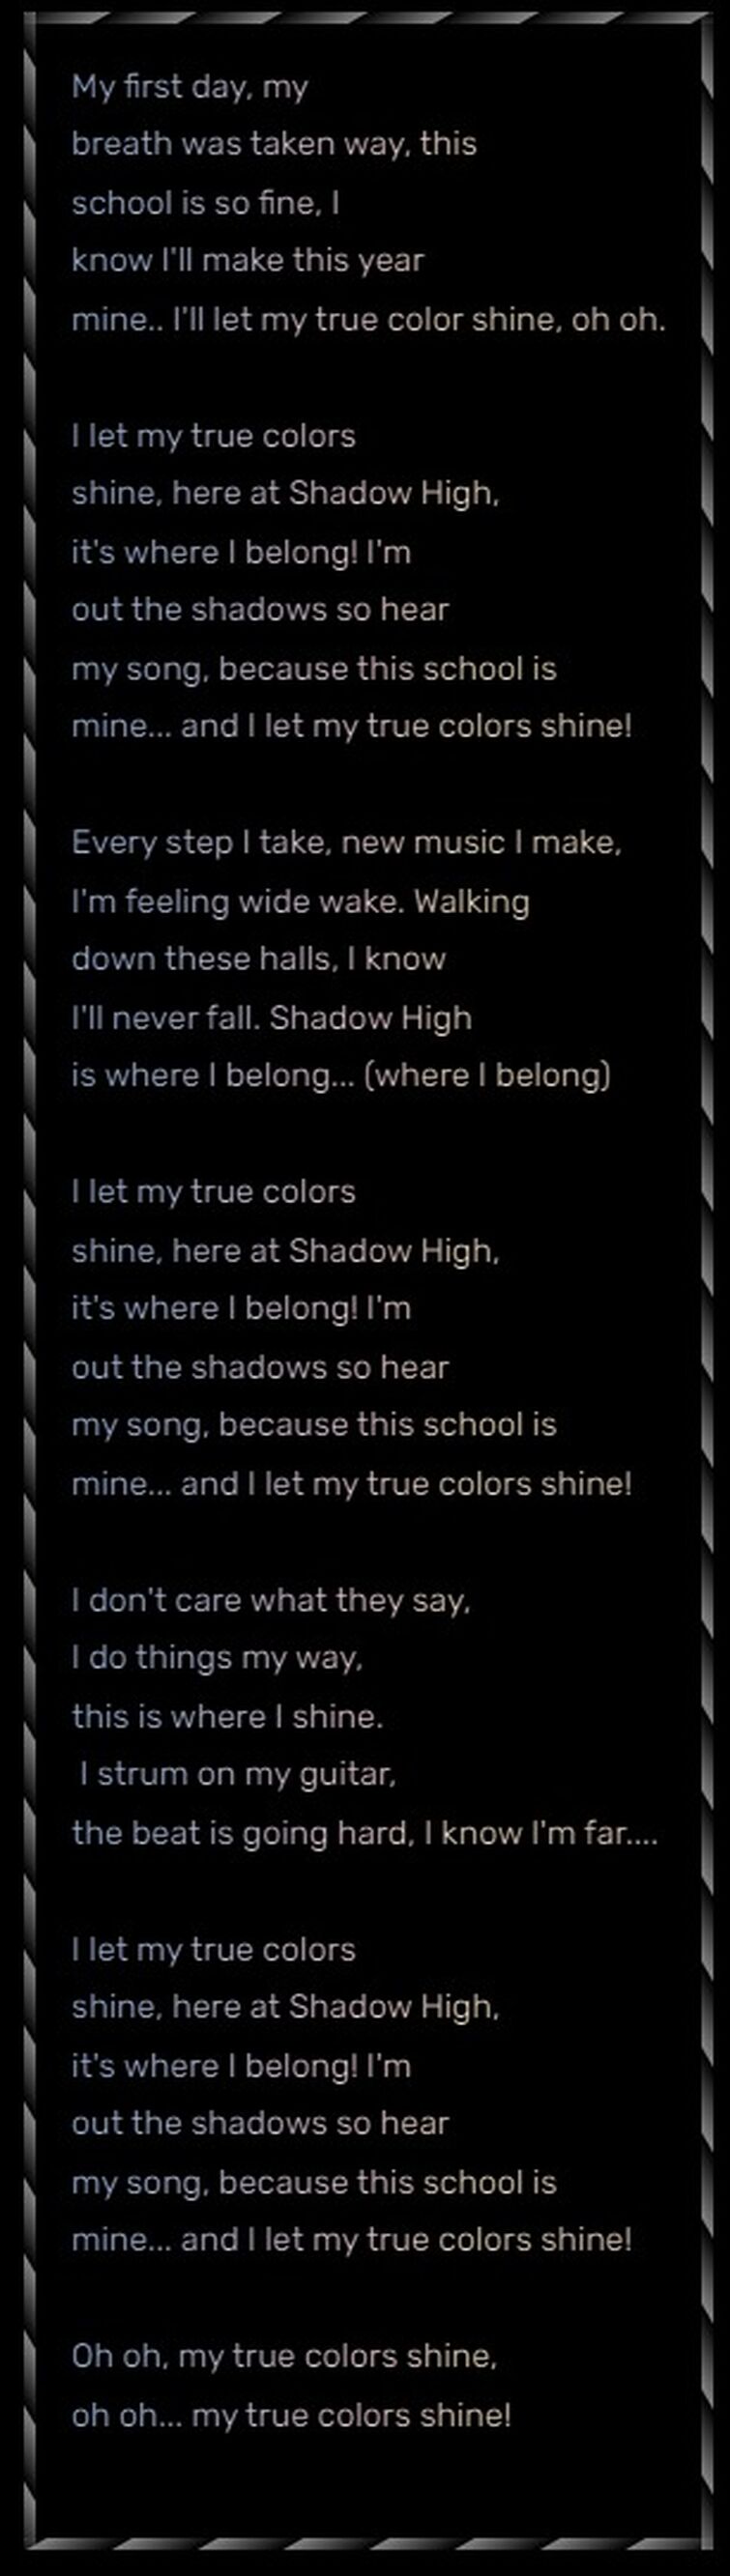 My True Colors Shine by MUSIC1500 | Fandom